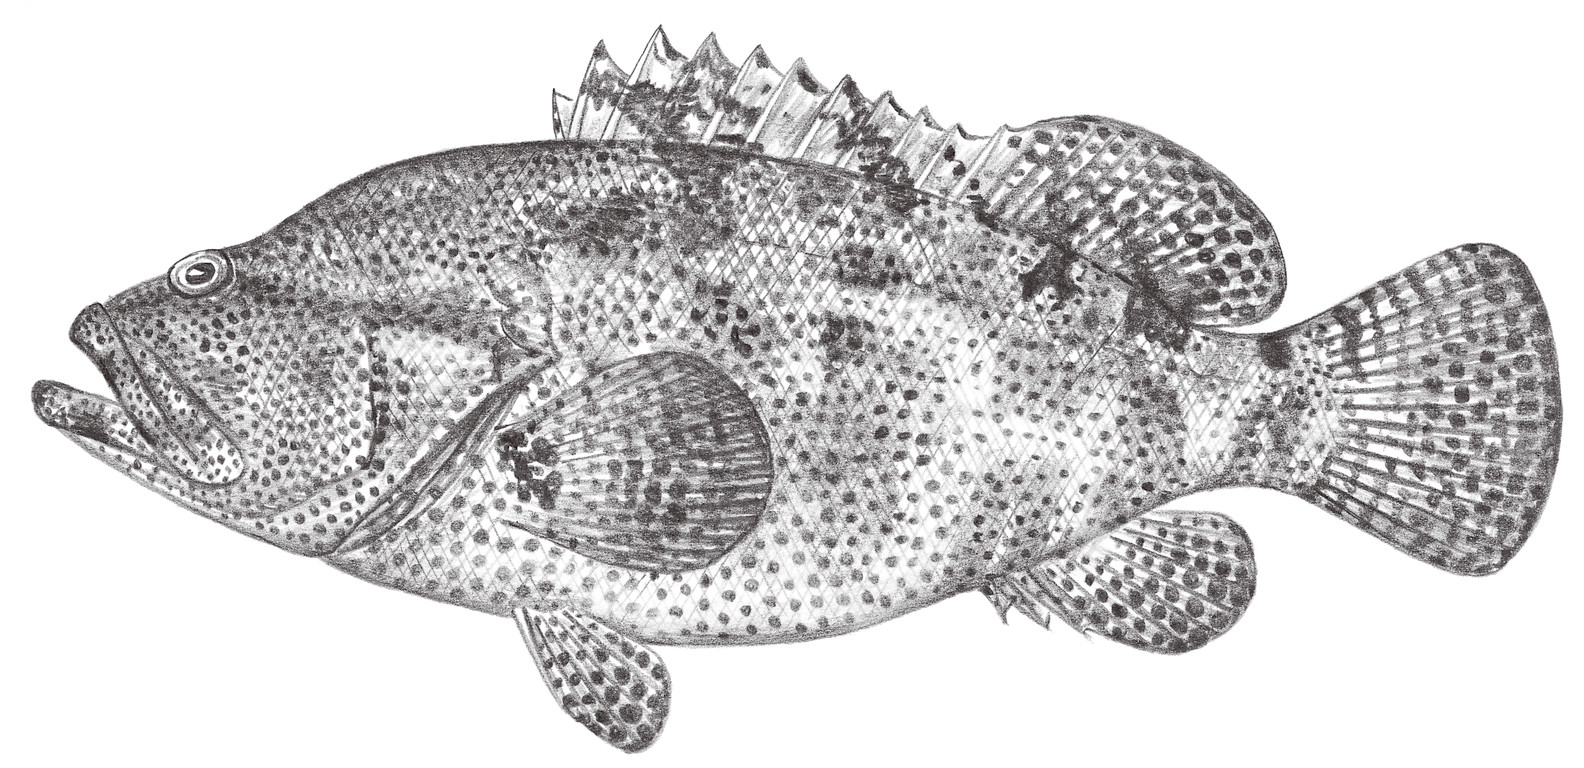 1028.	棕點石斑魚 Epinephelus fuscoguttatus (Forsskål, 1775)